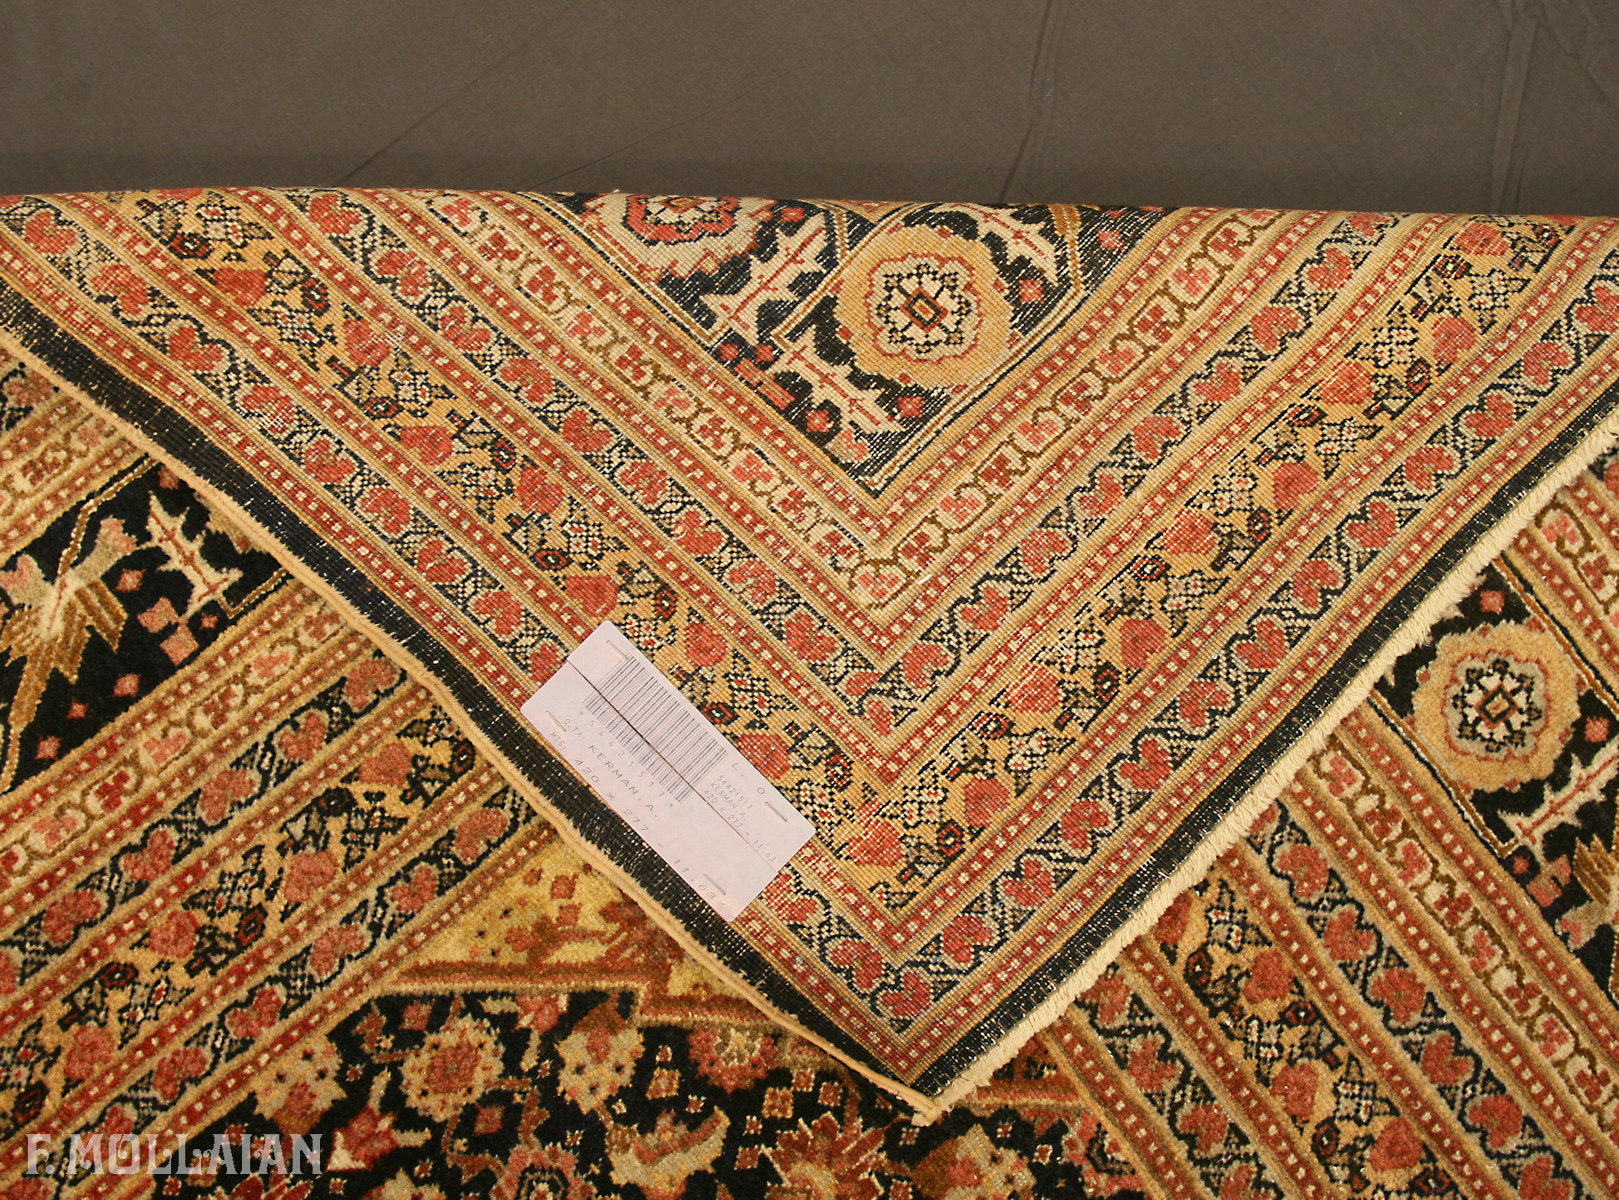 Antique Persian Tabriz Hadji Djalili Carpet n°:54421517